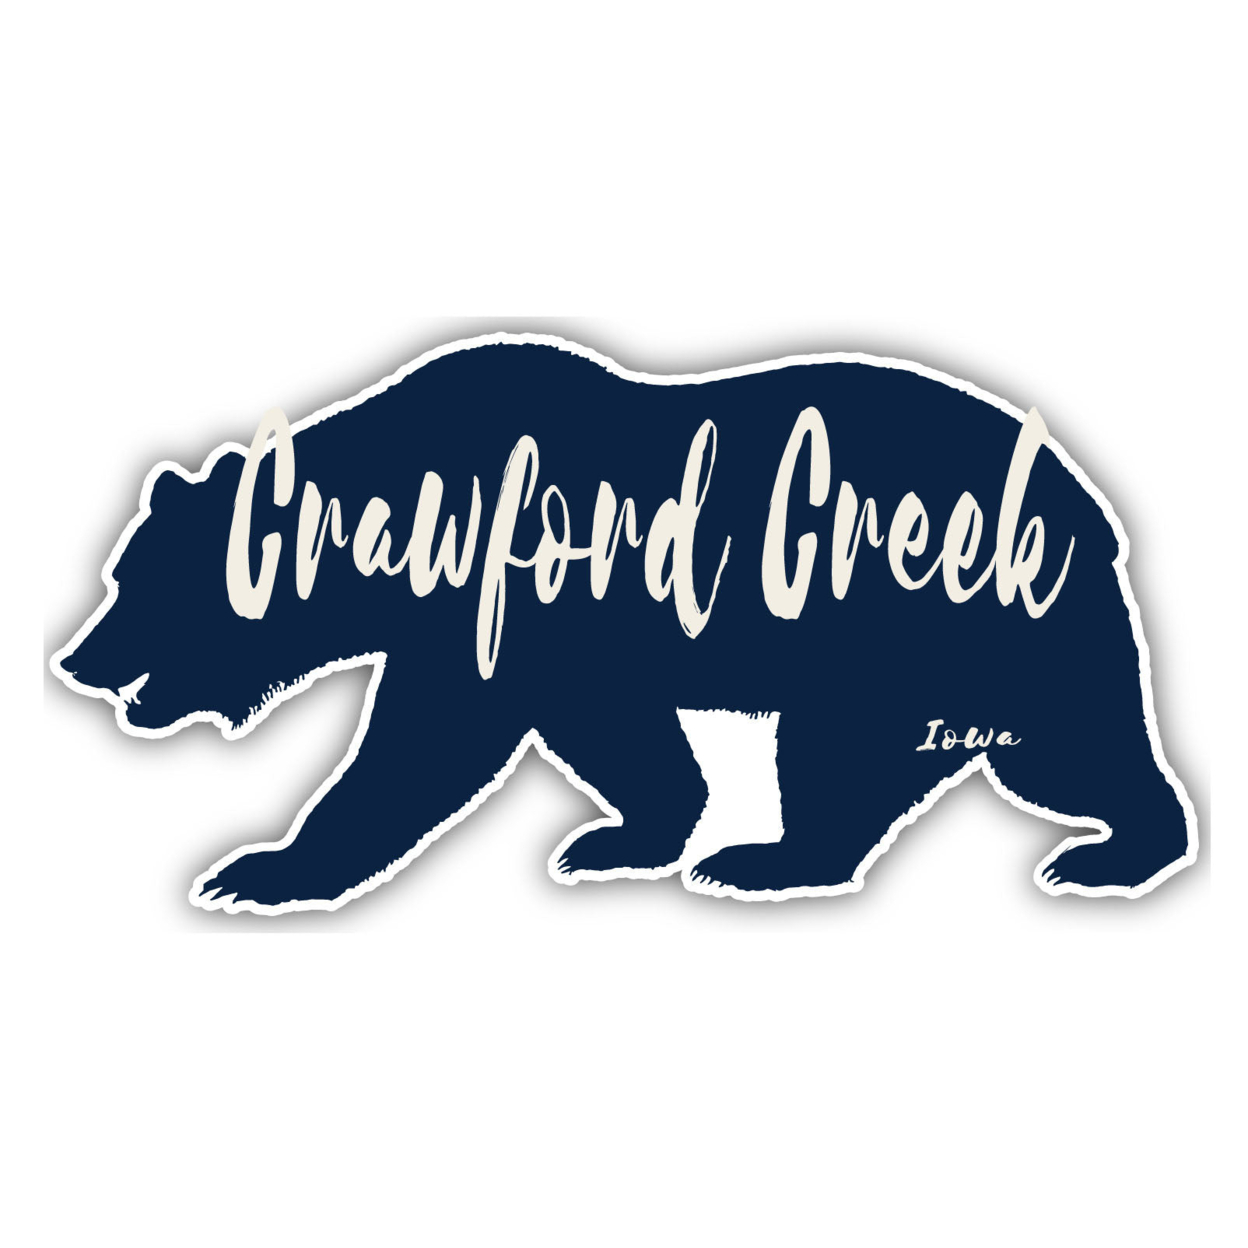 Crawford Creek Iowa Souvenir Decorative Stickers (Choose Theme And Size) - Single Unit, 12-Inch, Bear